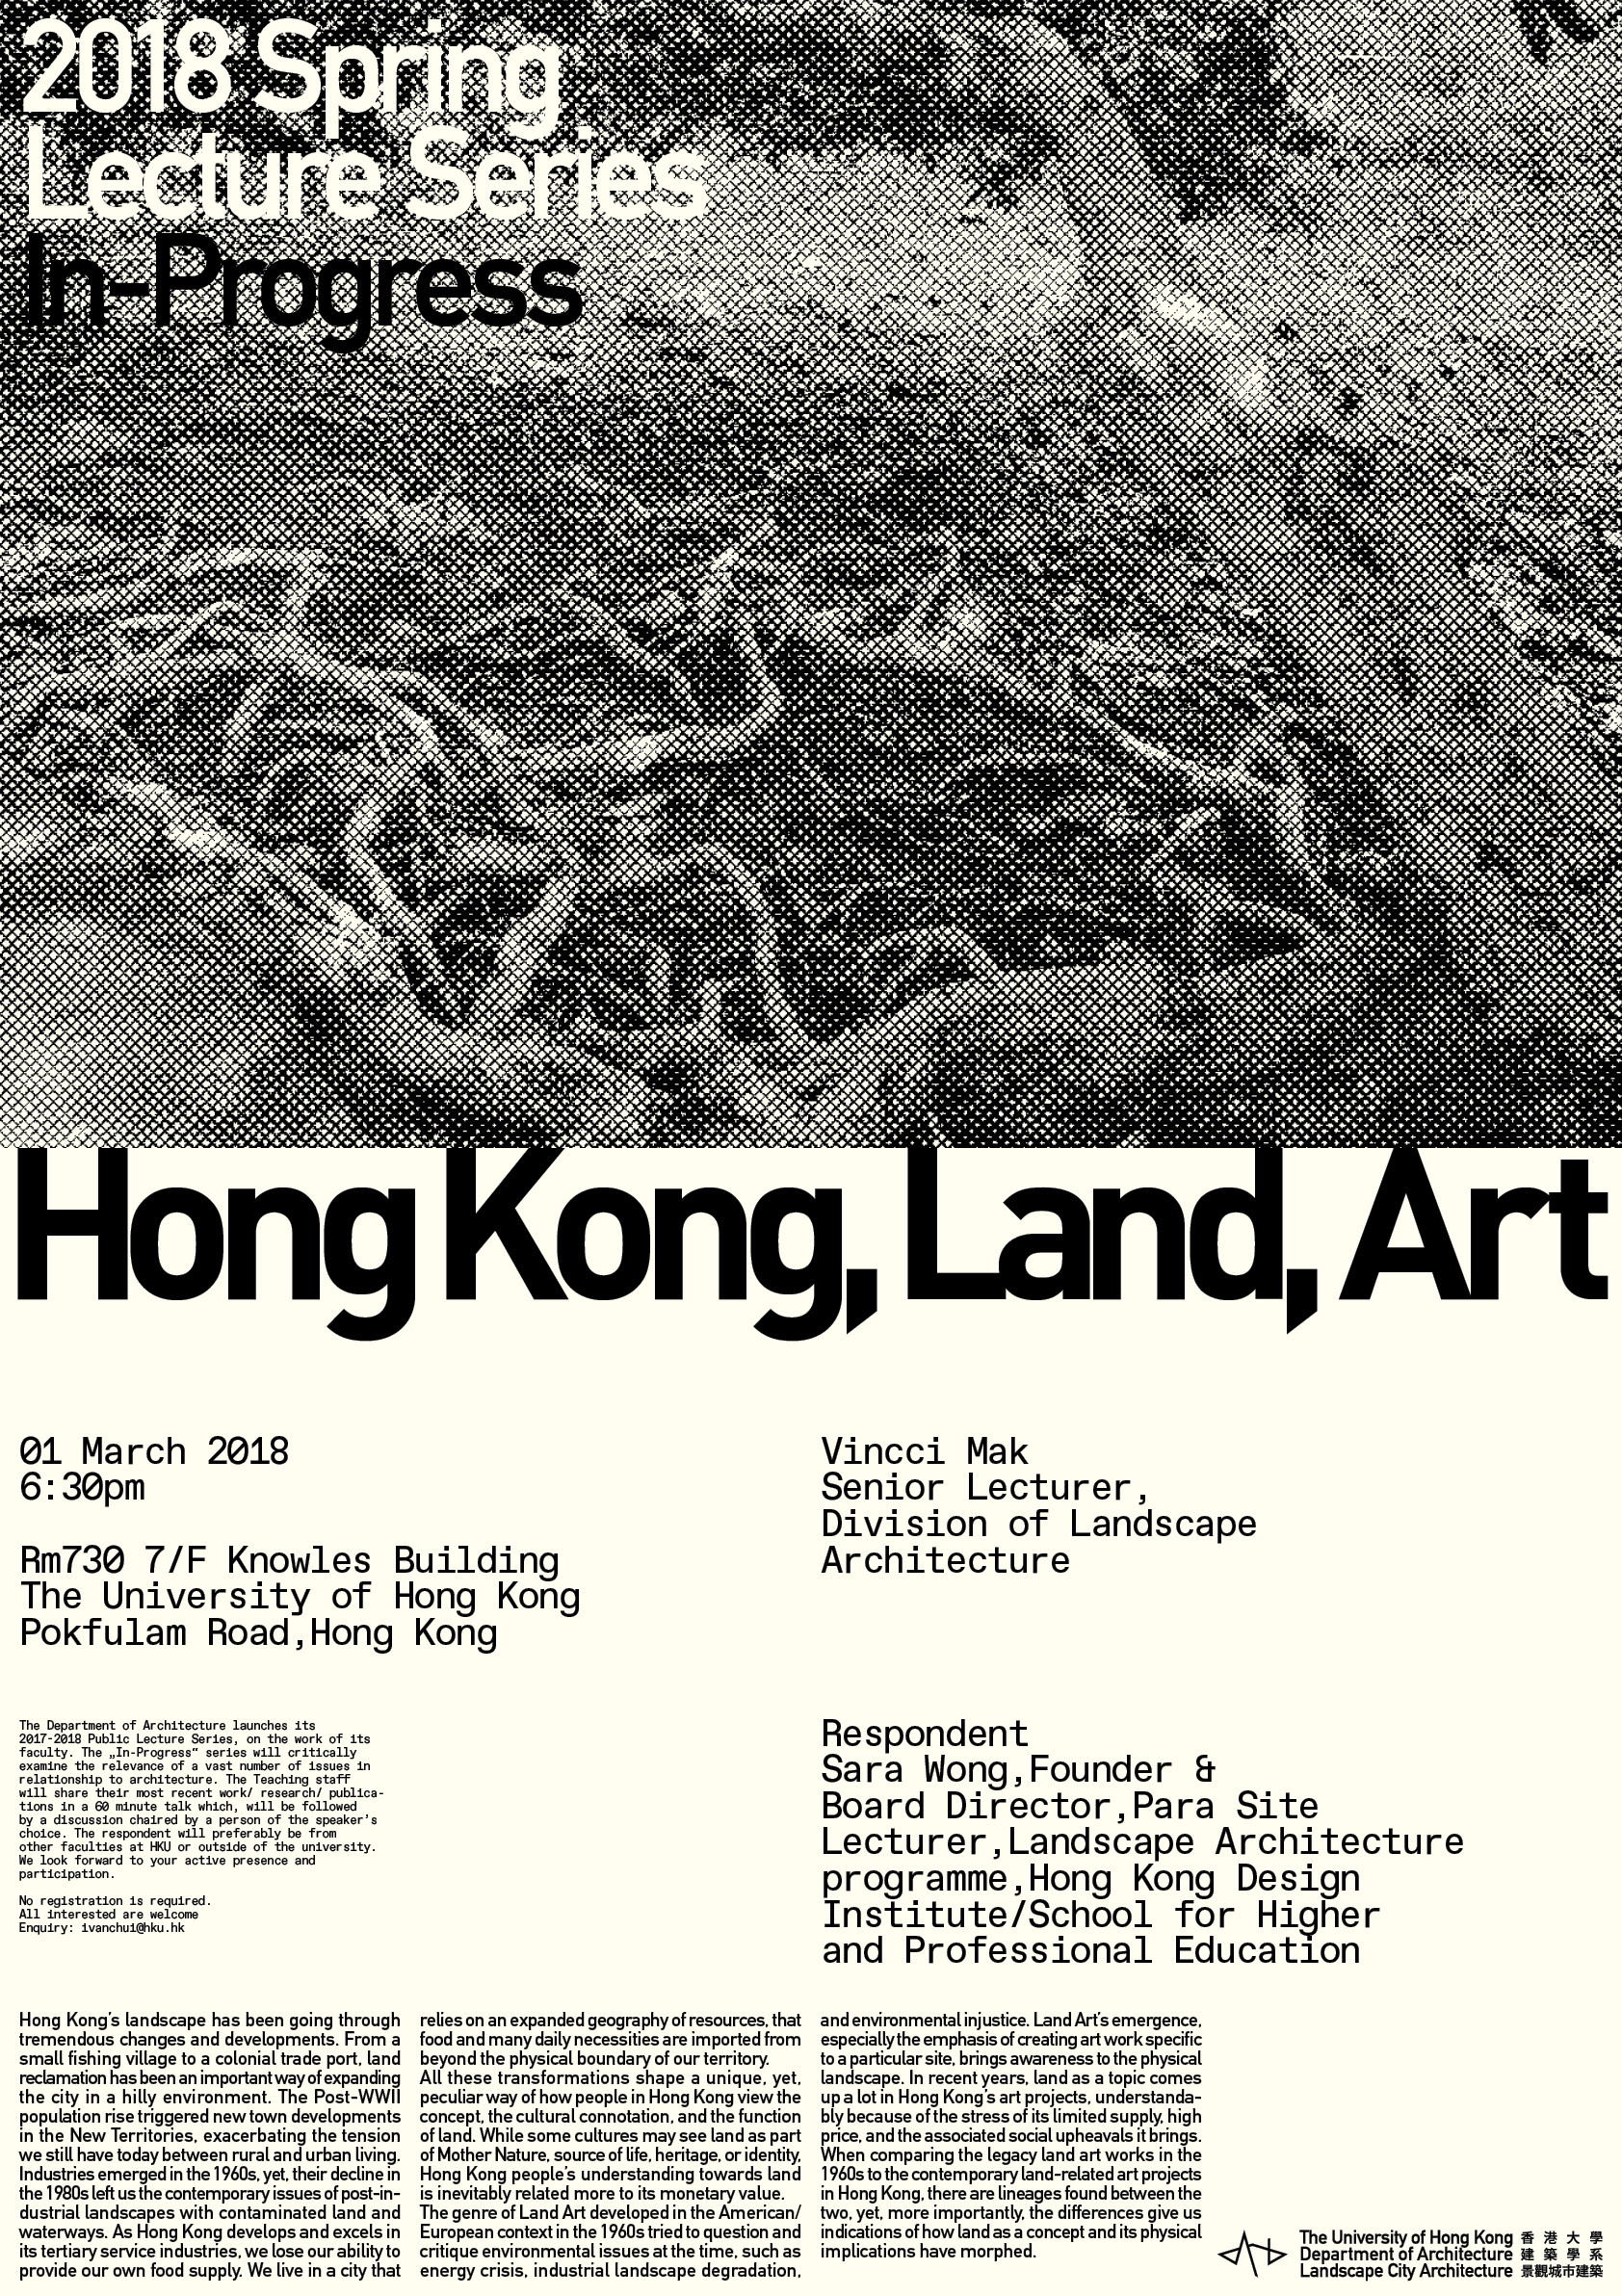 'Hong Kong, Land, Art' by Vincci Mak